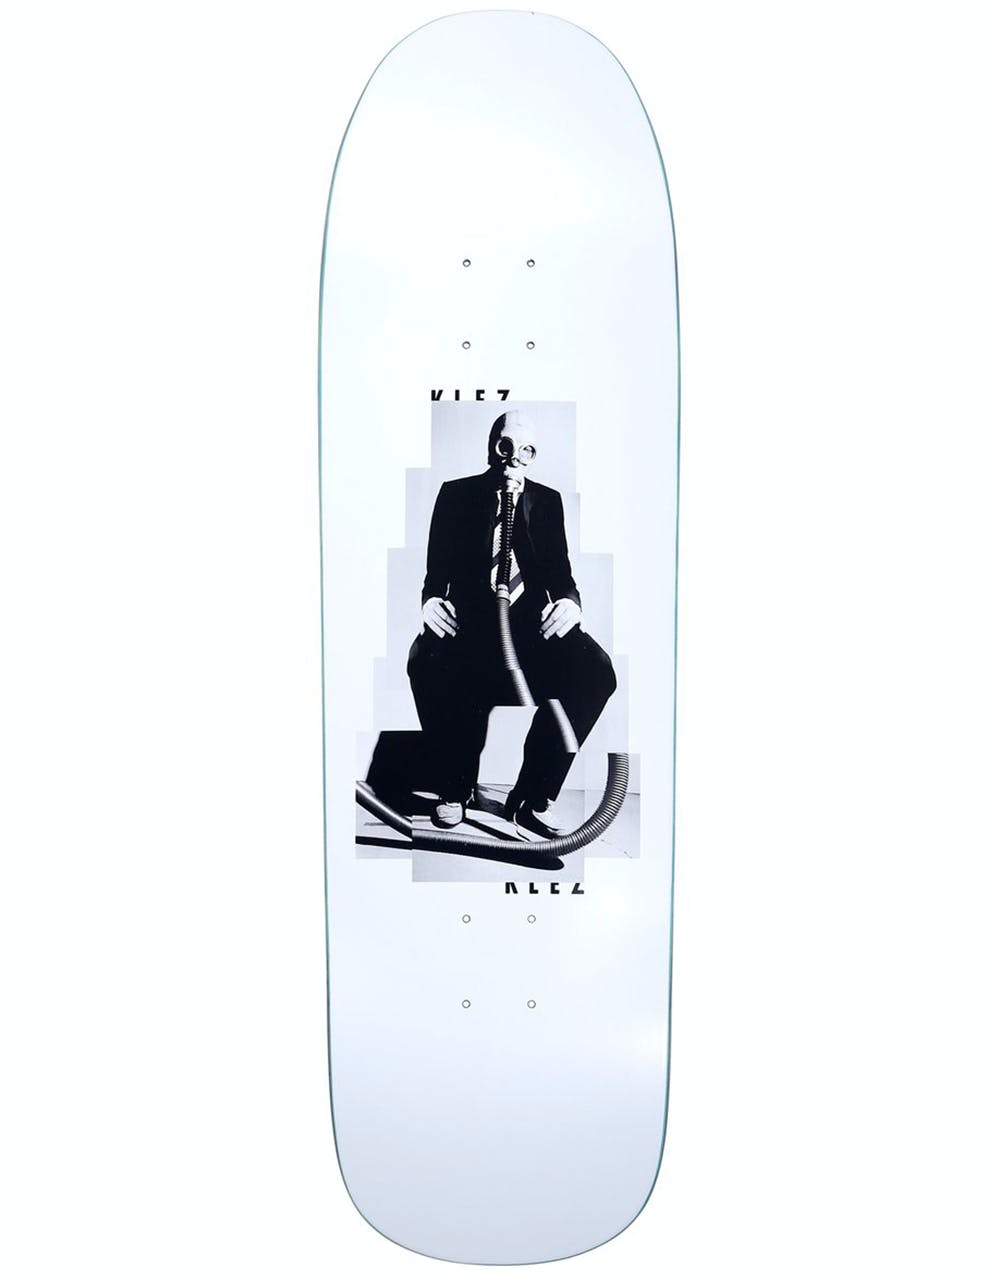 Polar Klez Brain Blower Skateboard Deck - 1991 Shape 9.25"